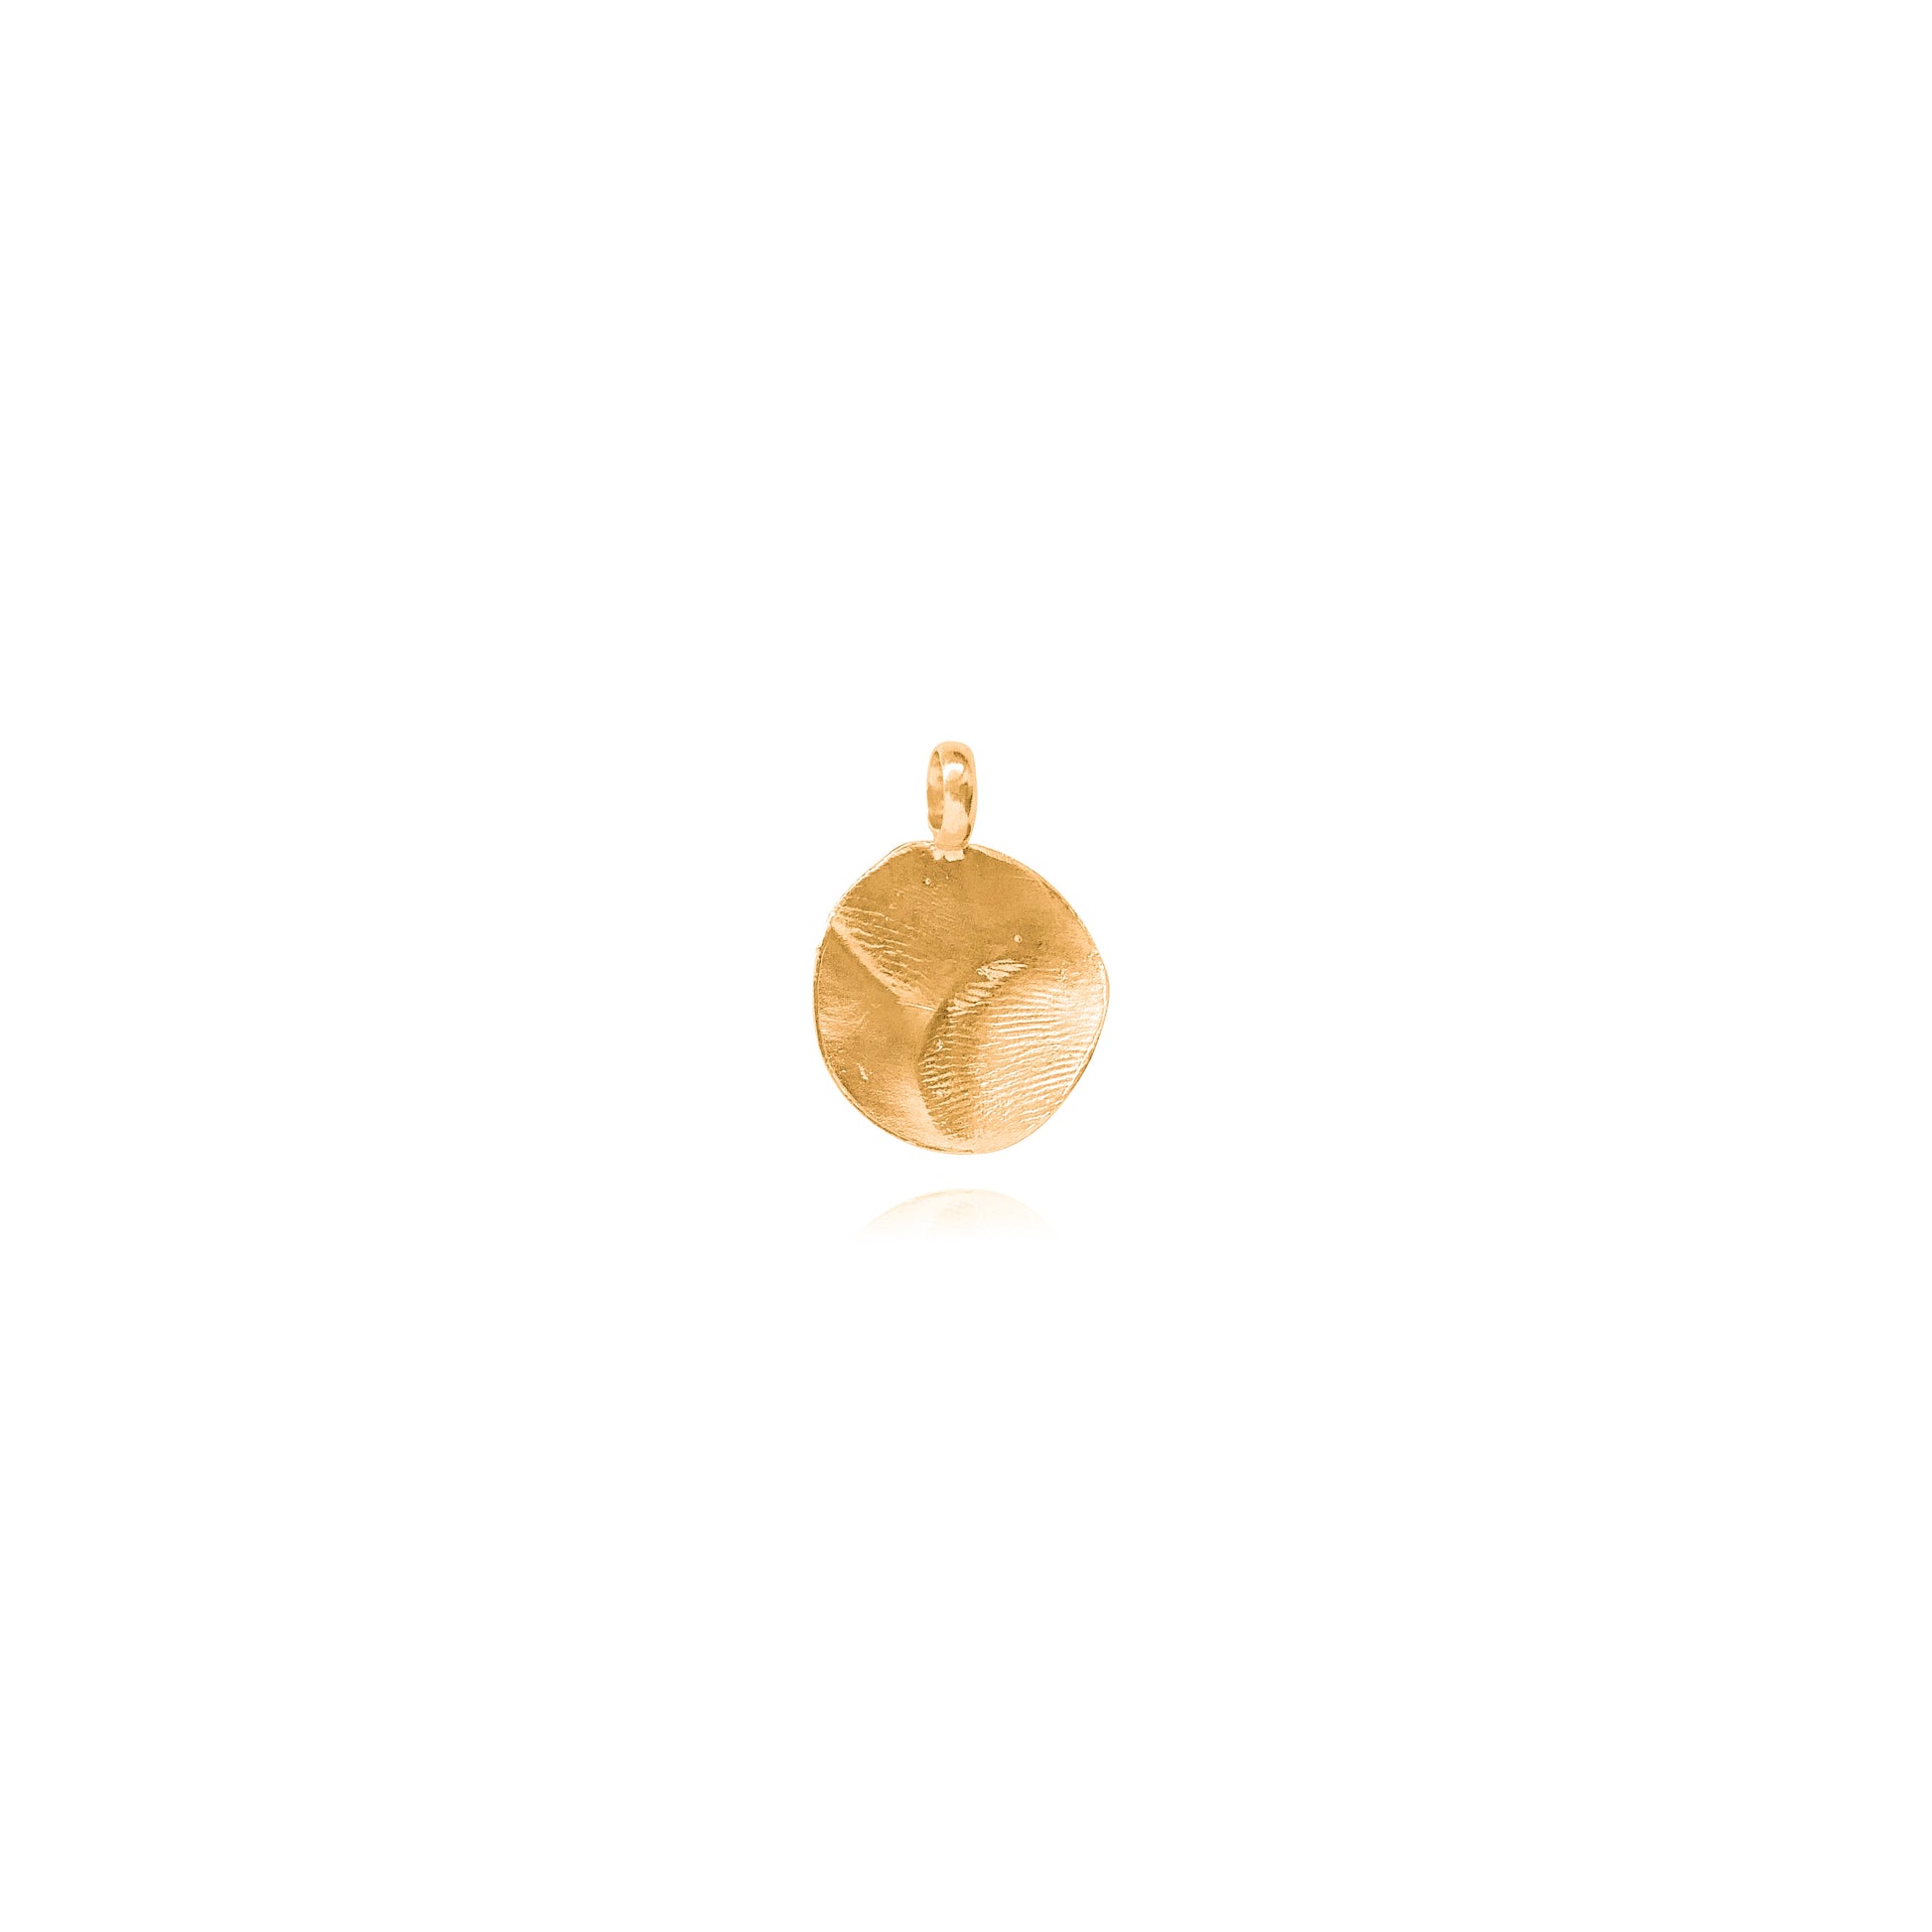 mel jewel bespoke necklace fingerprint pendant medalha impressão digital marca portuguesa